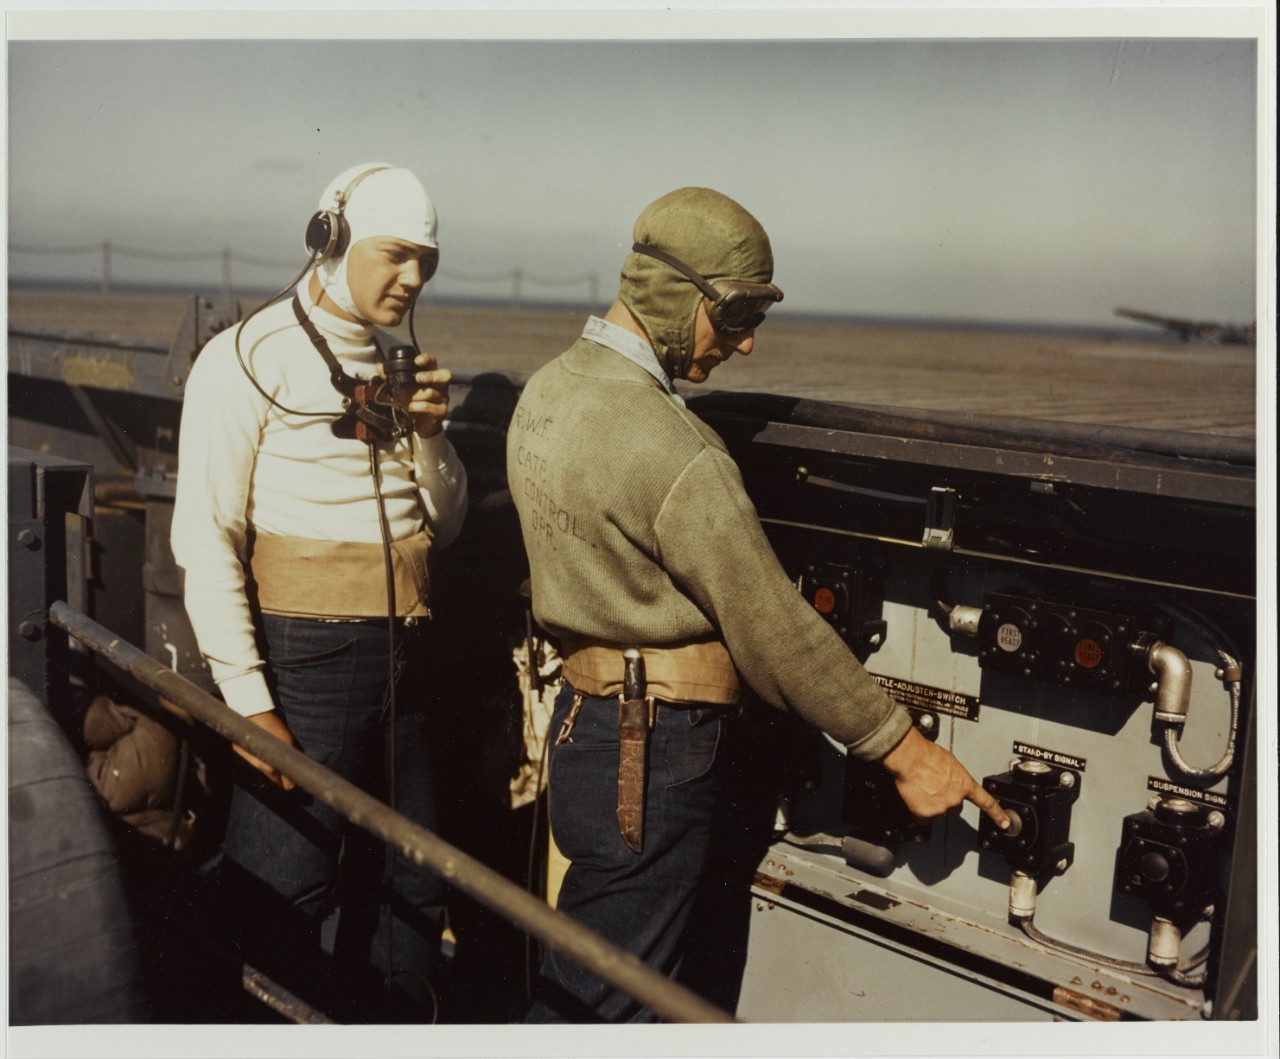 Catapult Crew Member and his Talker, circa 1943-1945